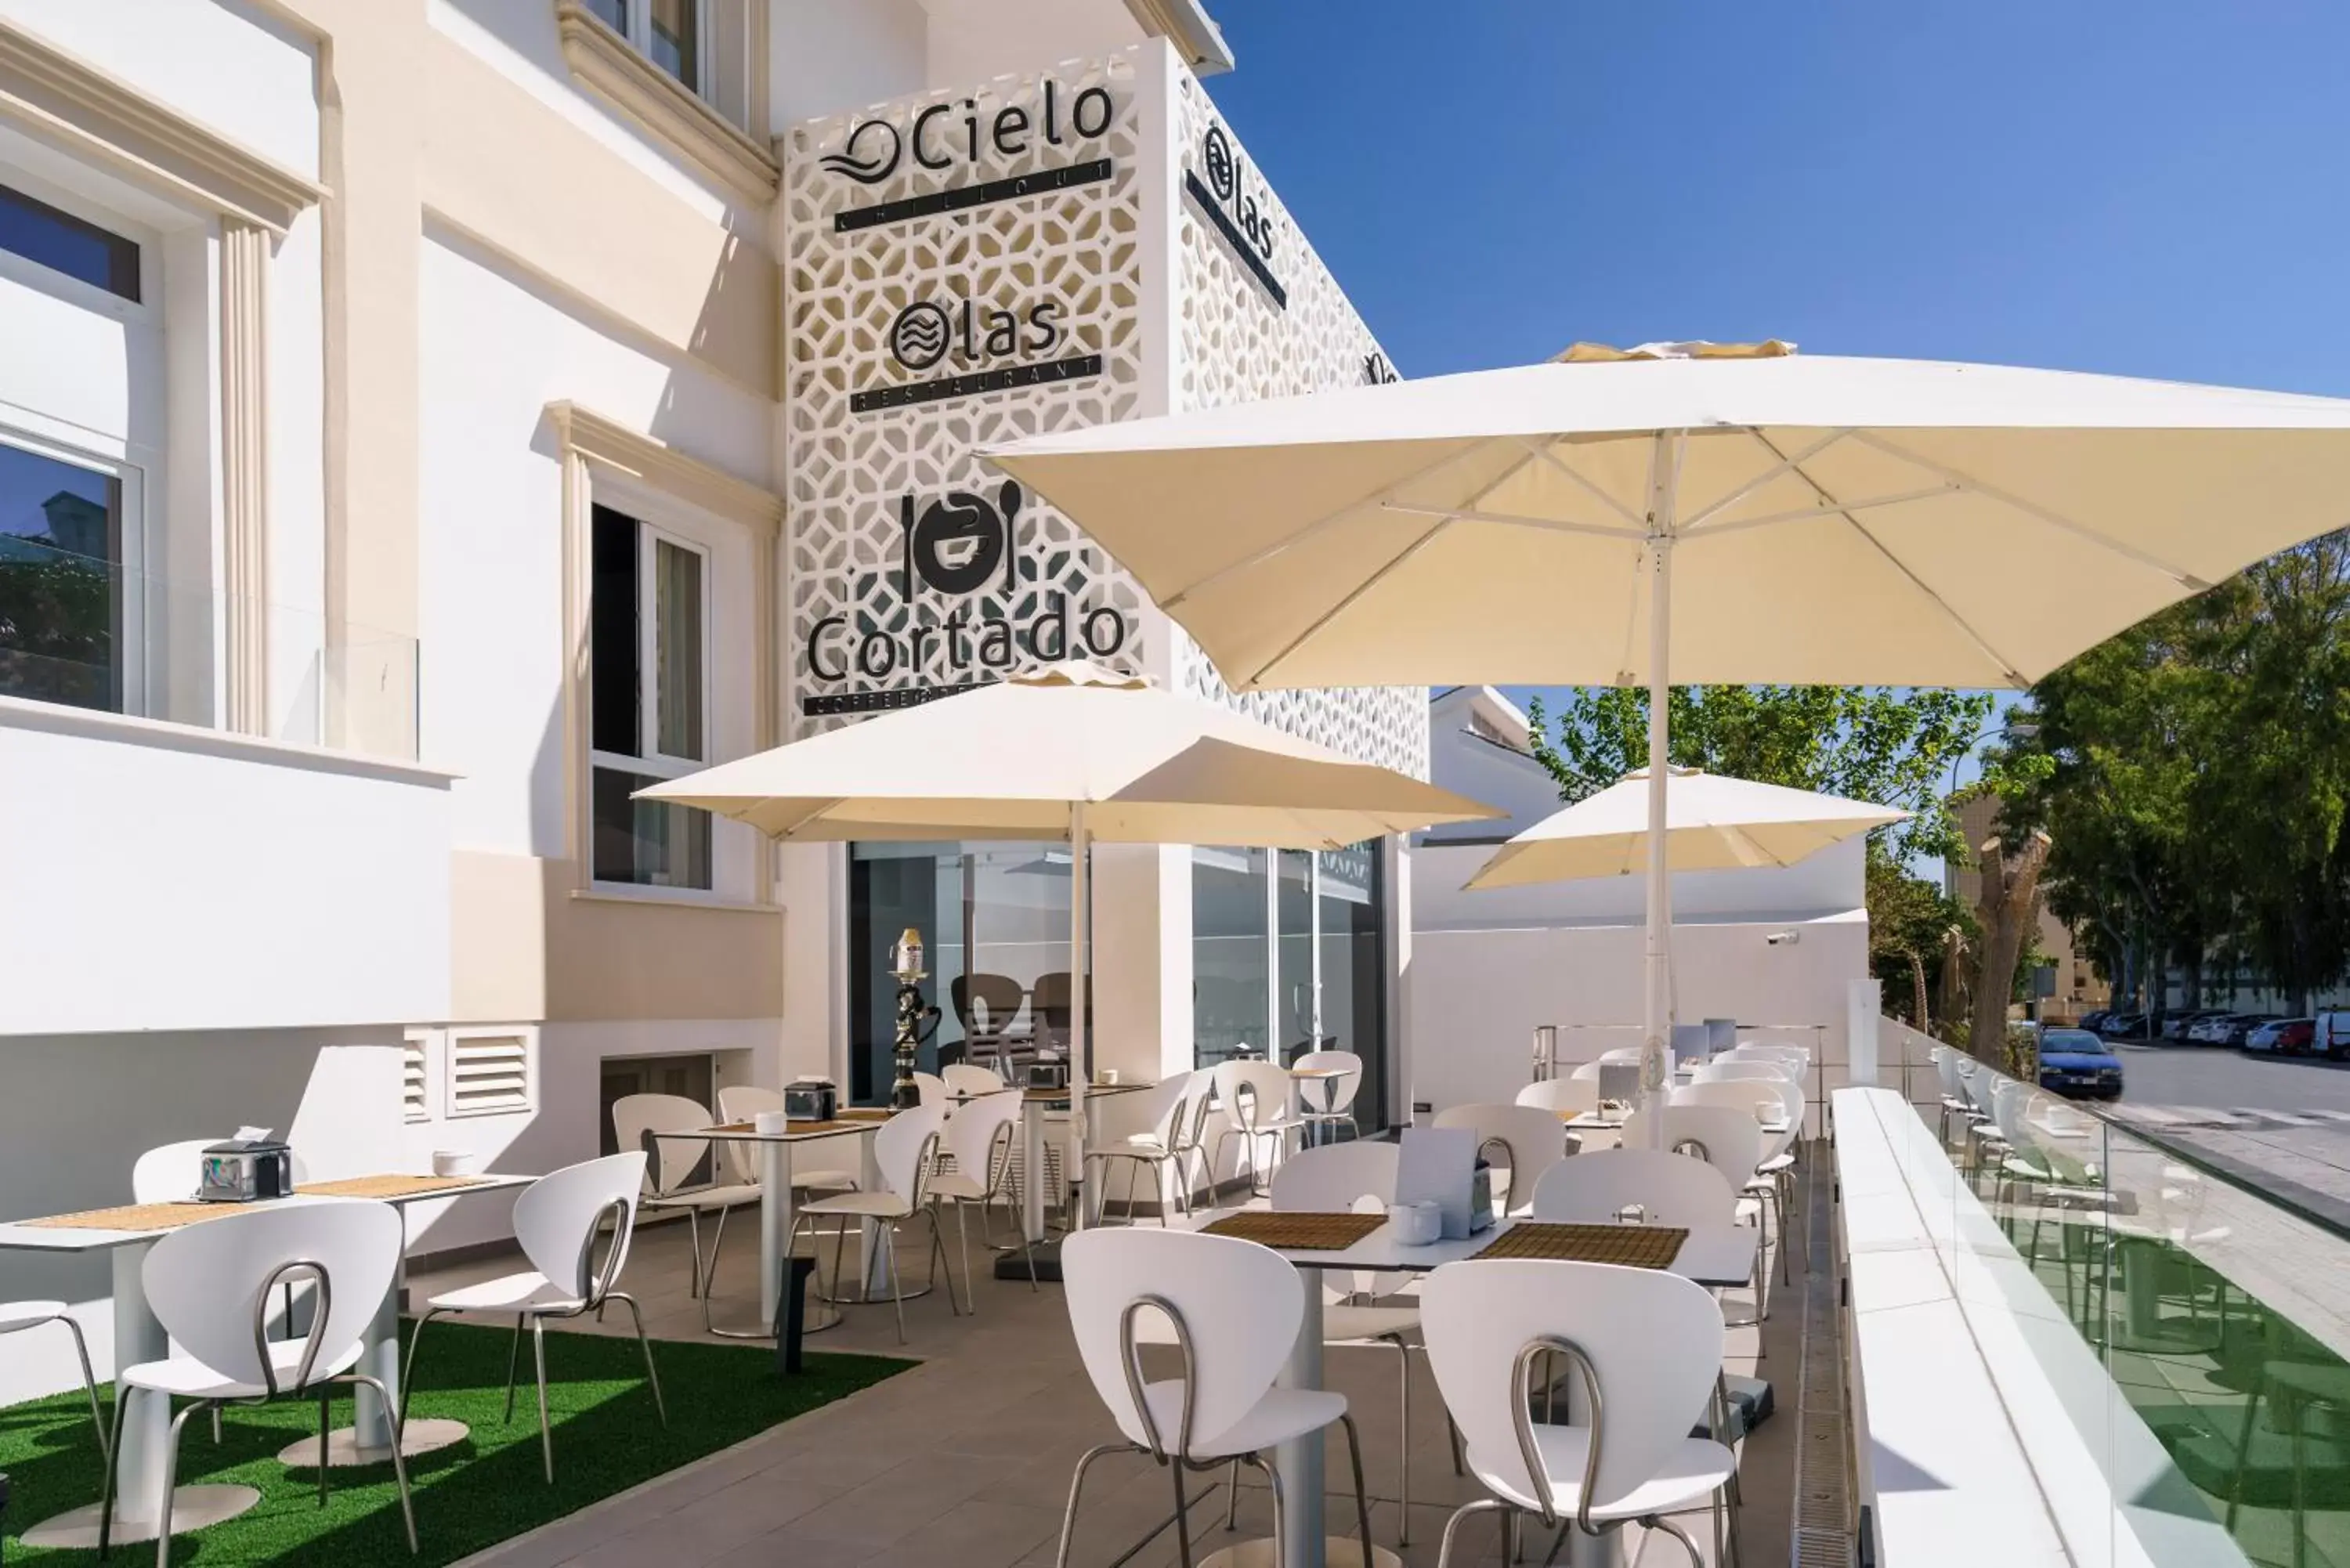 Restaurant/places to eat in Costa del Sol Torremolinos Hotel